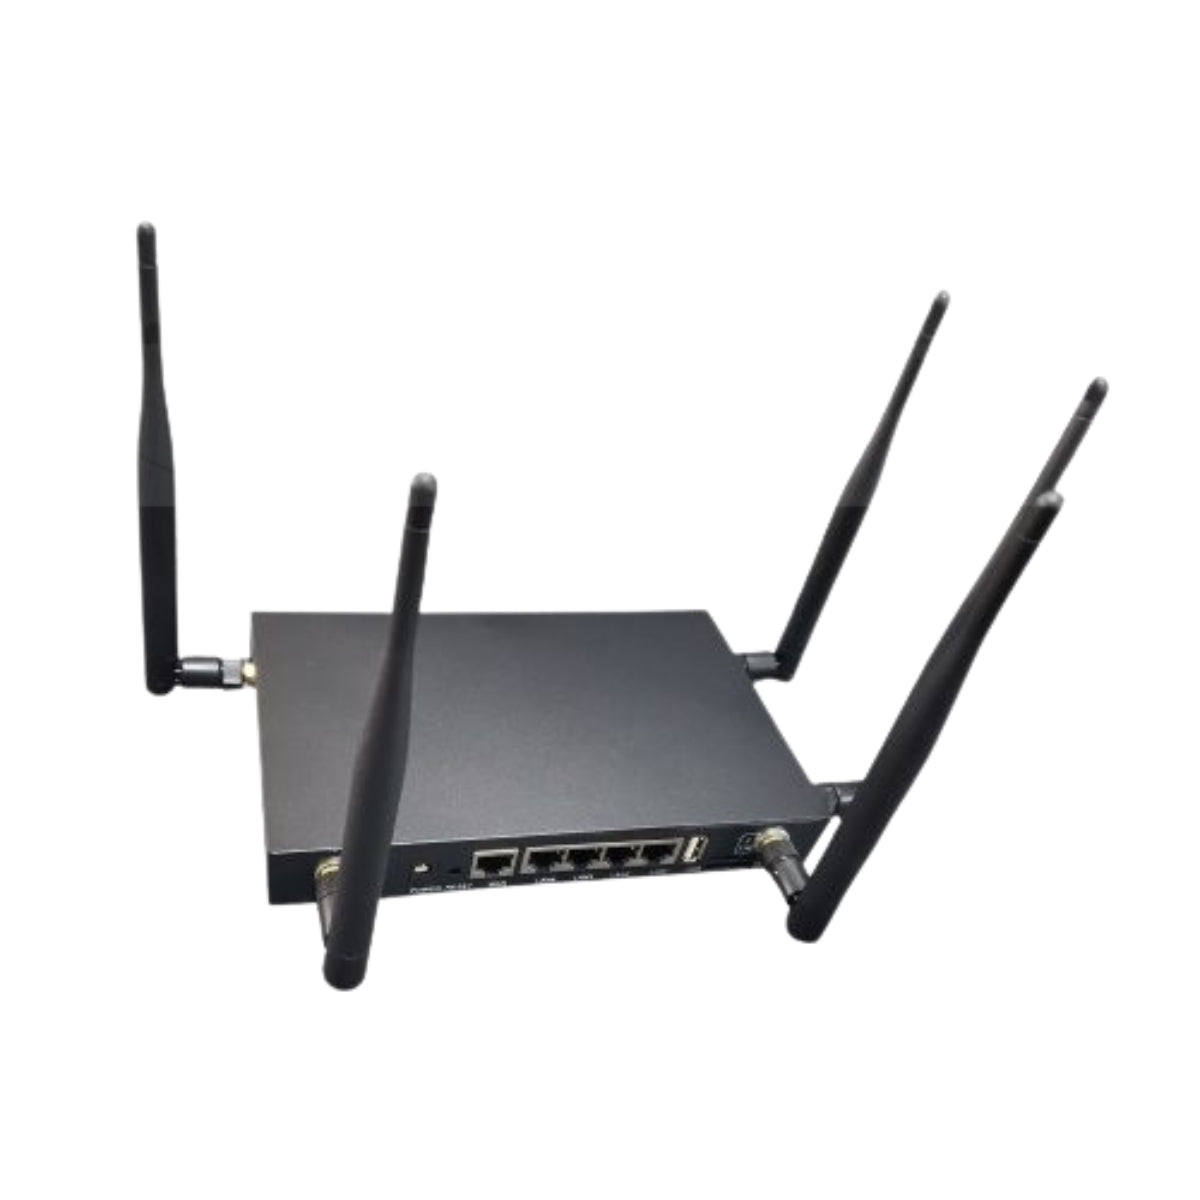 NEXR5GO Cellular Ready Router (PoE) - Dual Band (2.4GHz & 5.8GHz) WiFi